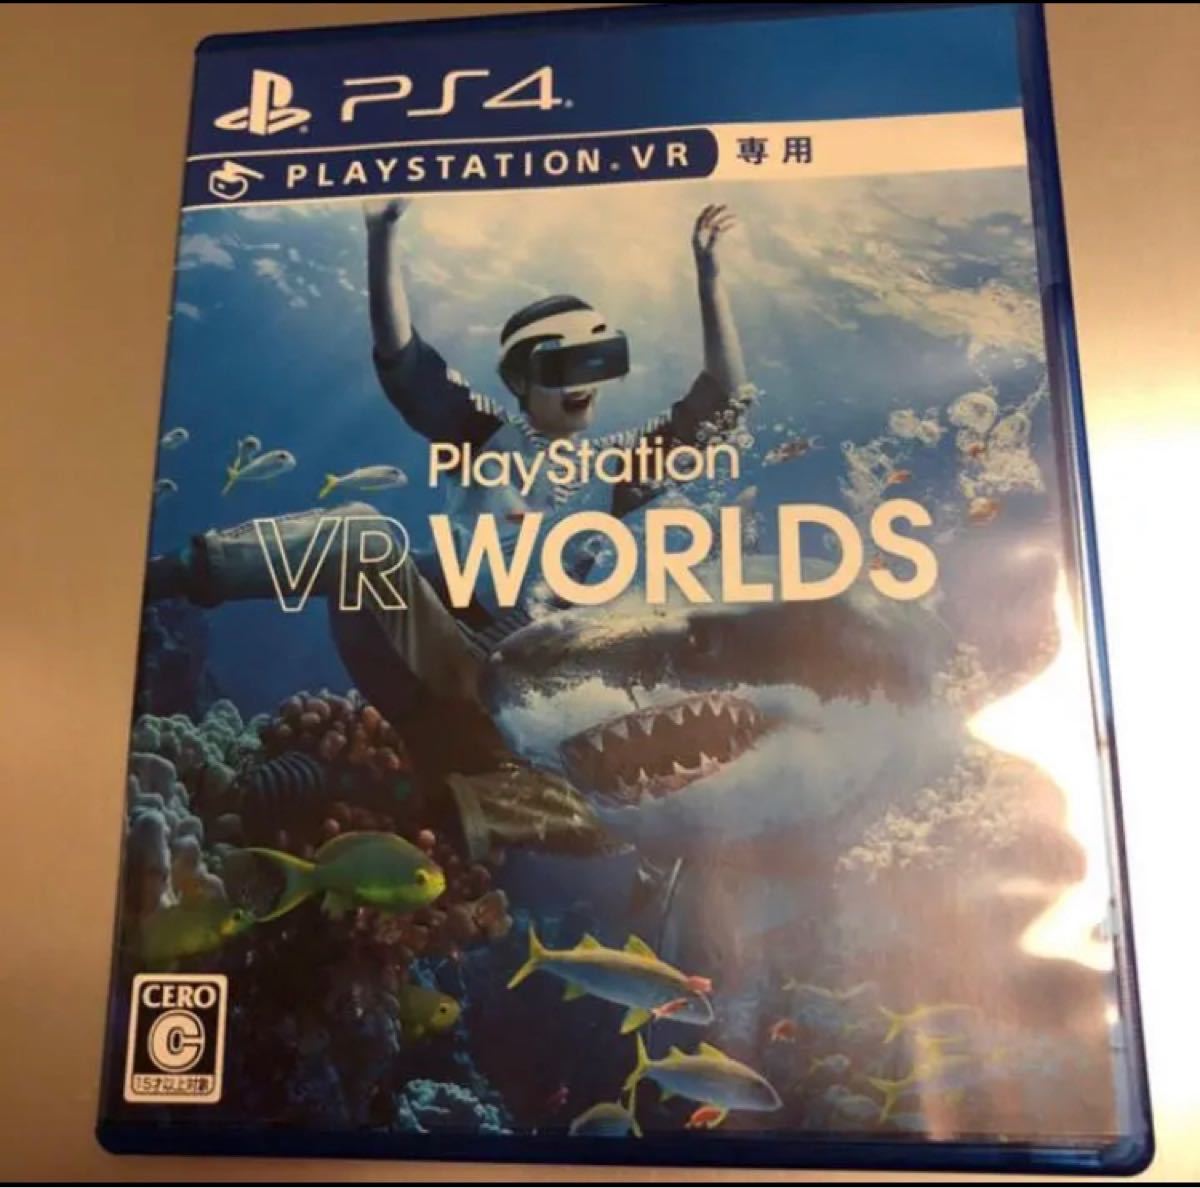 PS4 PlayStation VR WORLD VRWORLDS